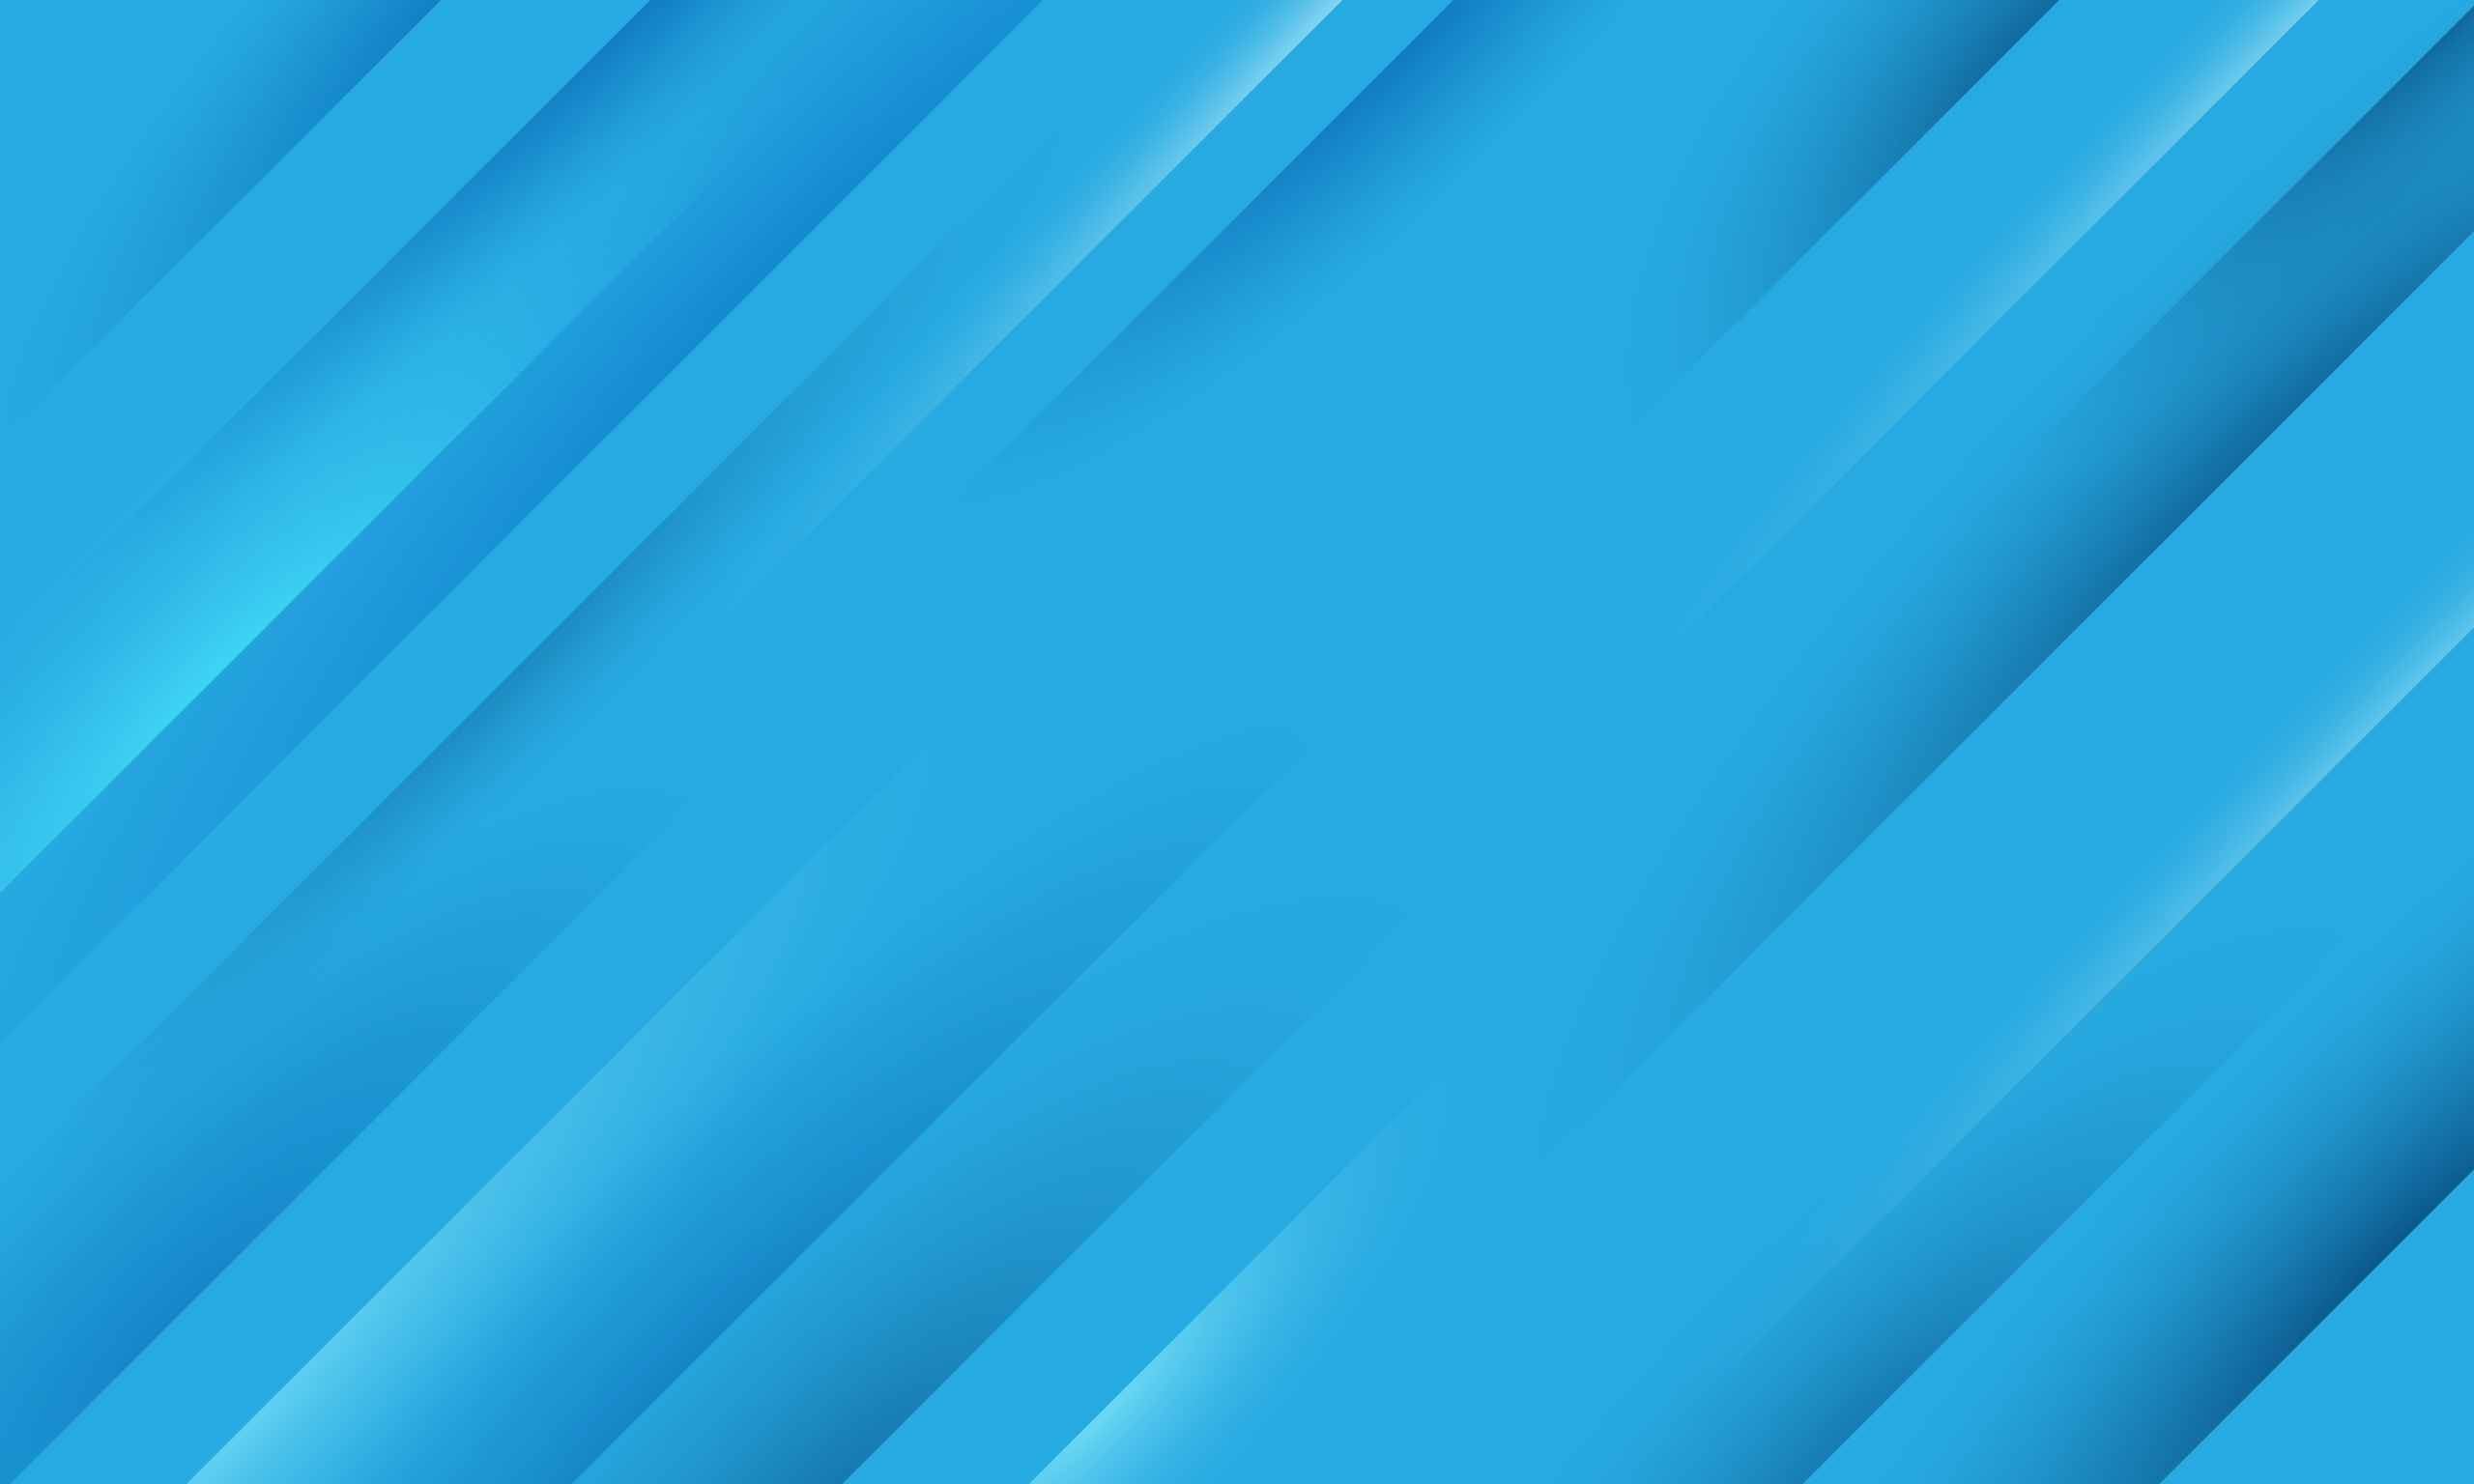 Abstract blue diagonal stripes on a digital Xterra background.